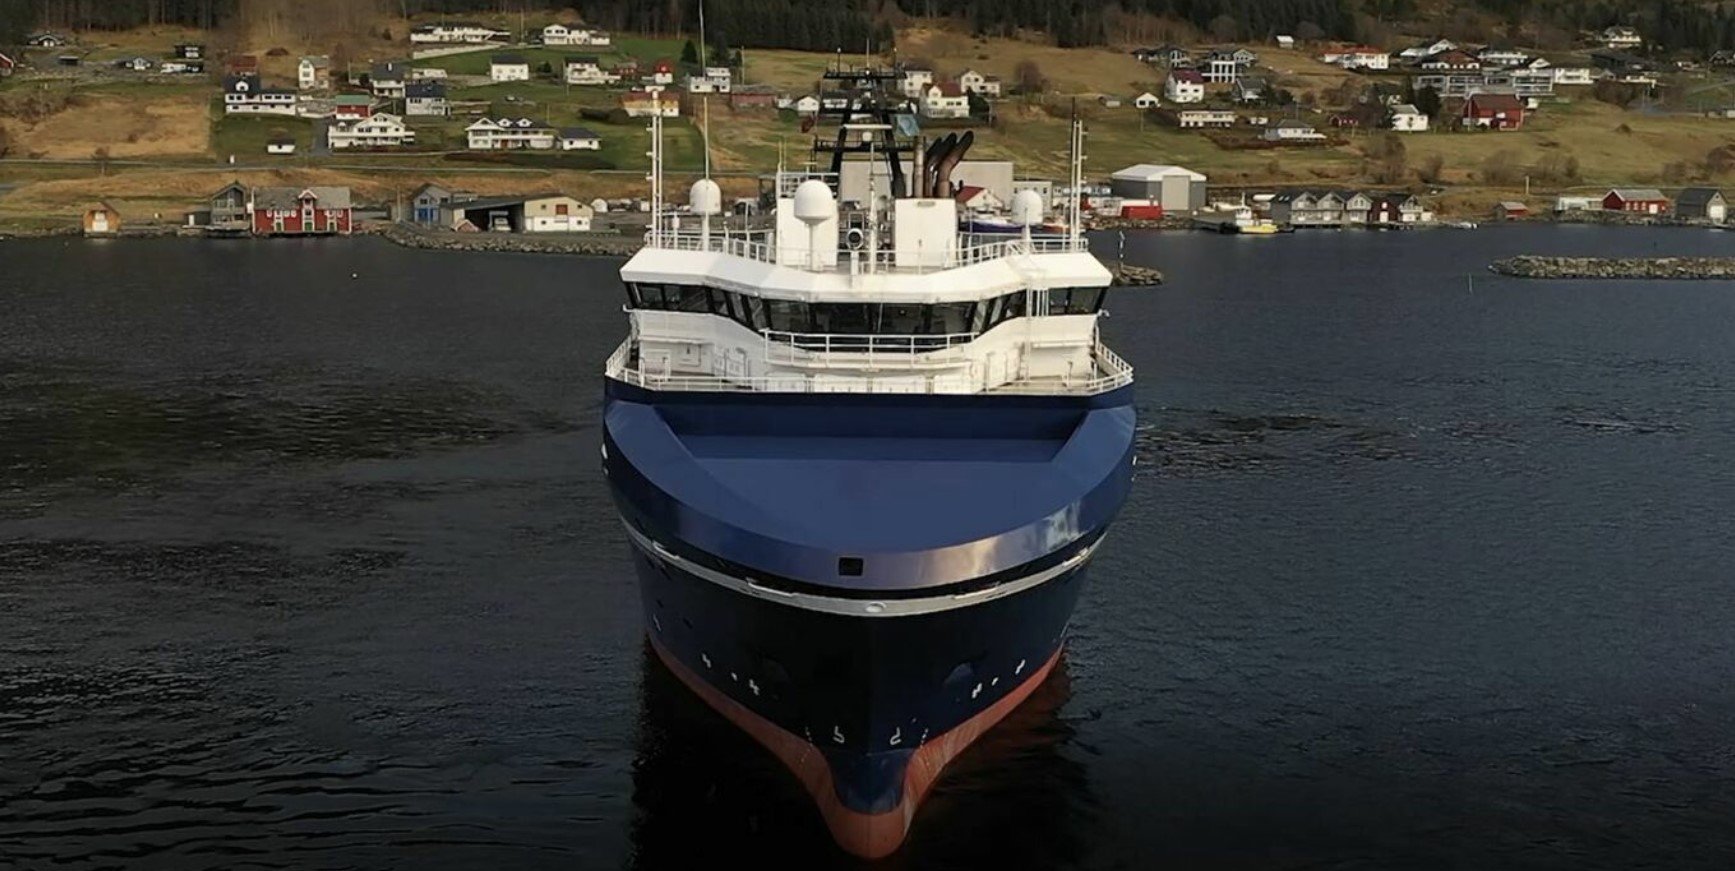 Vard to make Norwegian platform supply vessel more sustainable